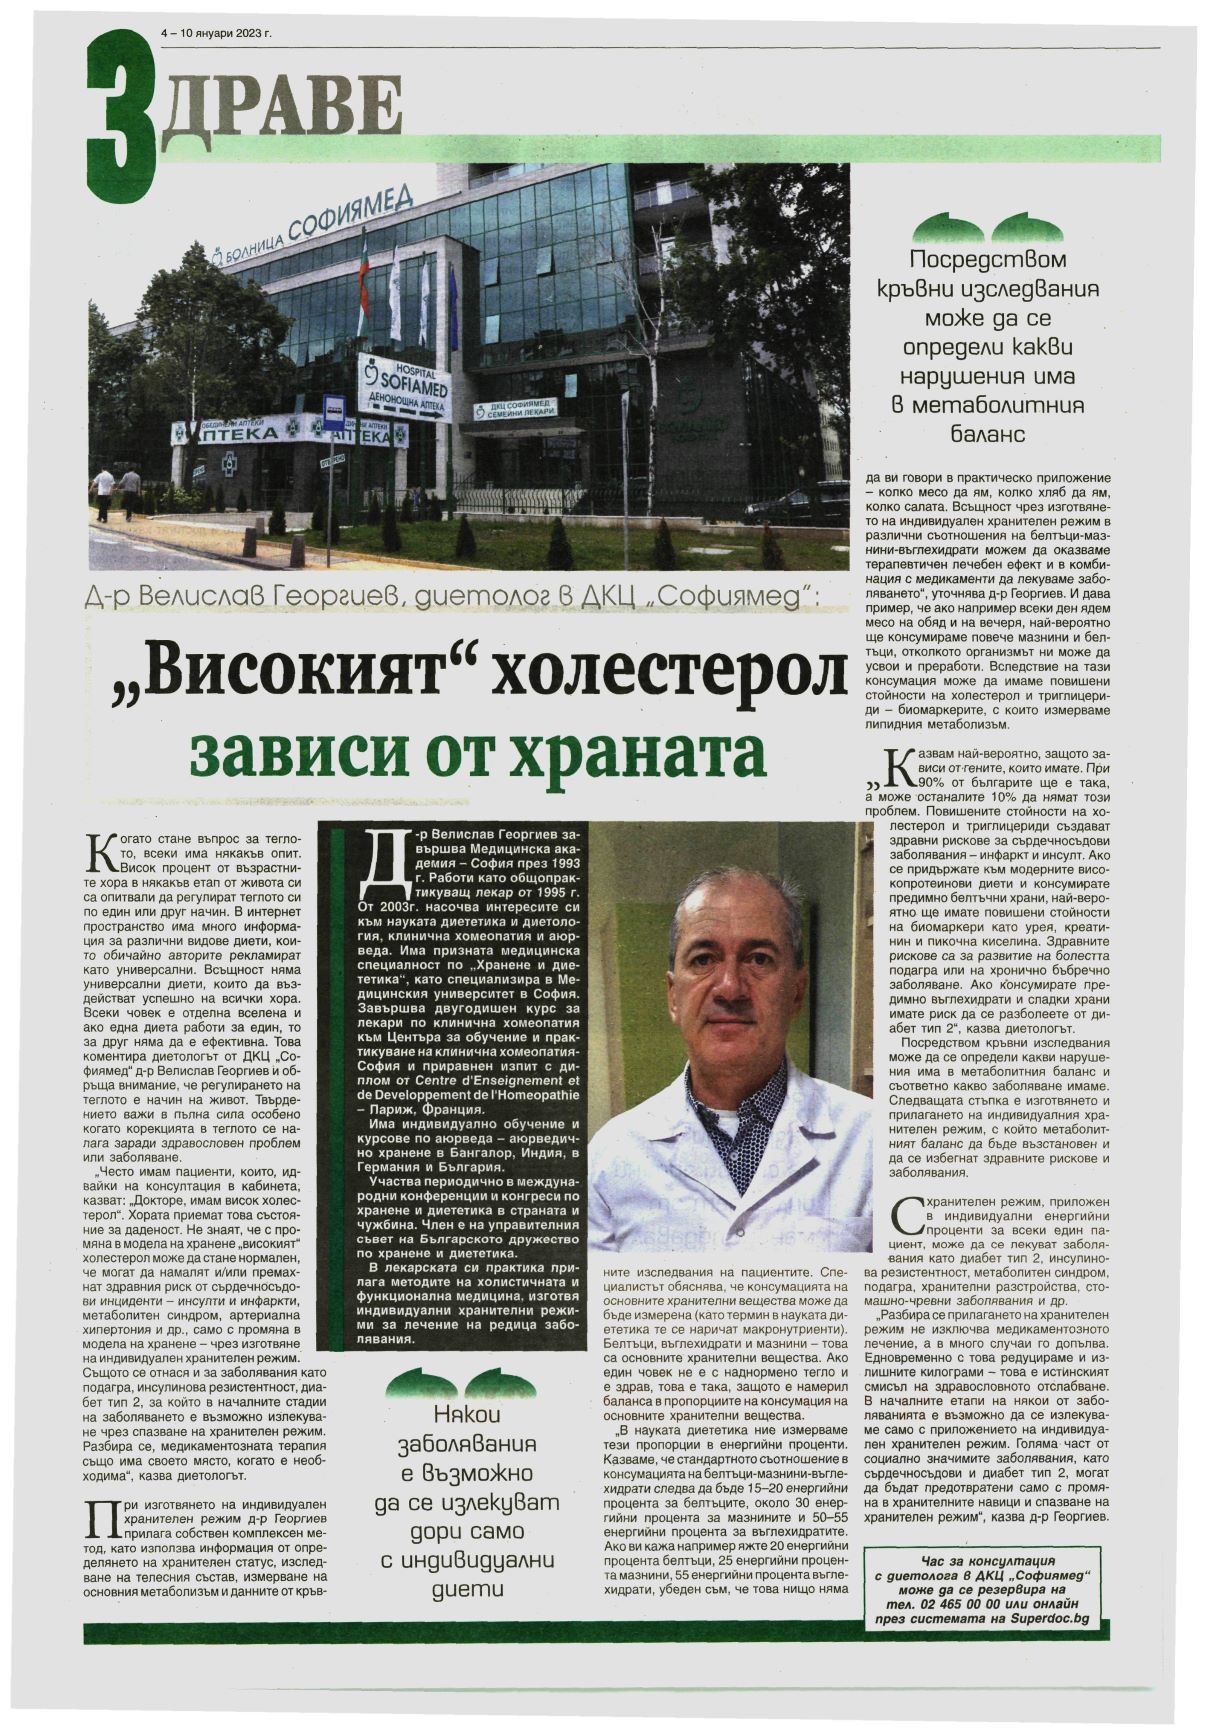 Д-р Велислав Георгиев, диетолог в ДКЦ 